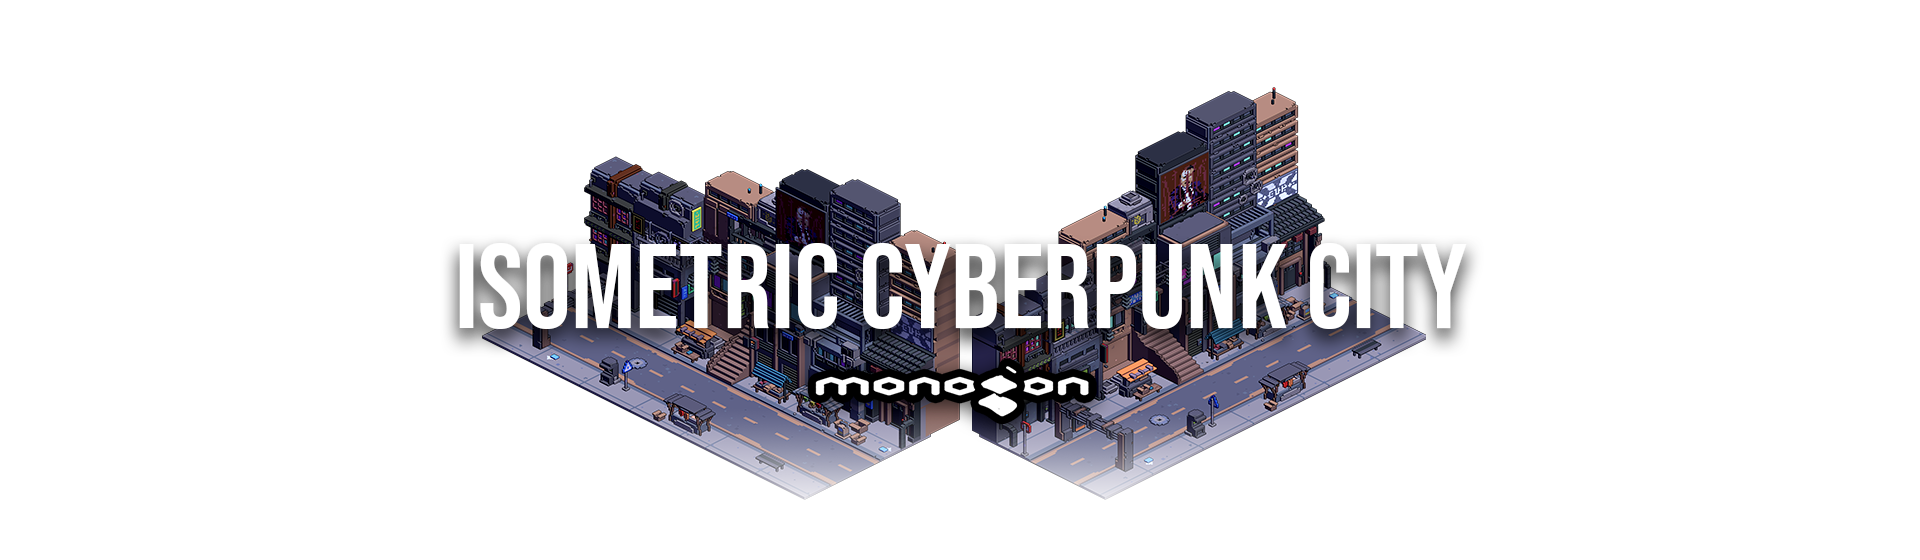 Isometric Cyberpunk City - monogon